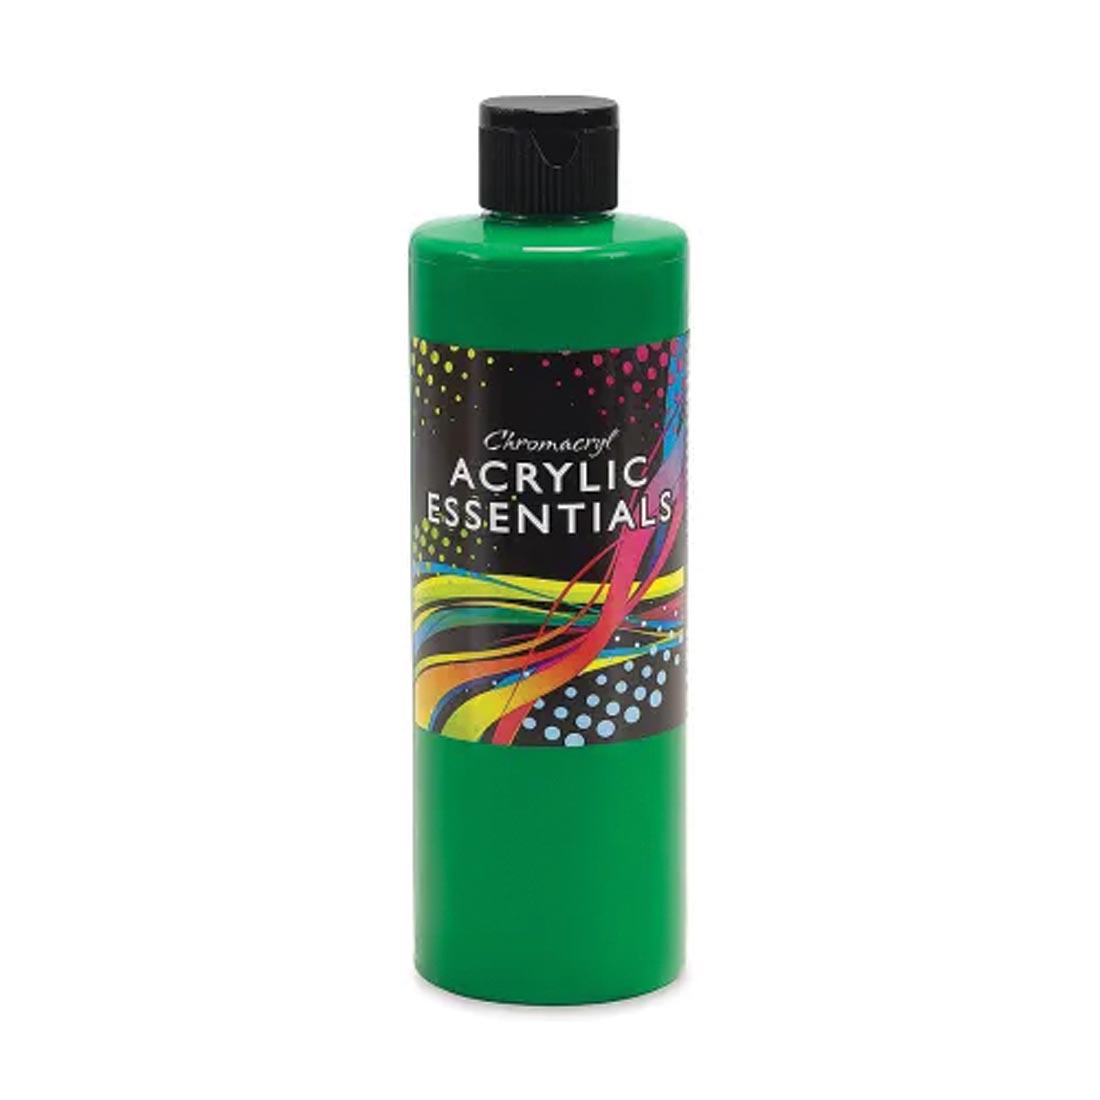 Bottle of Green Chromacryl Acrylic Essentials Paint